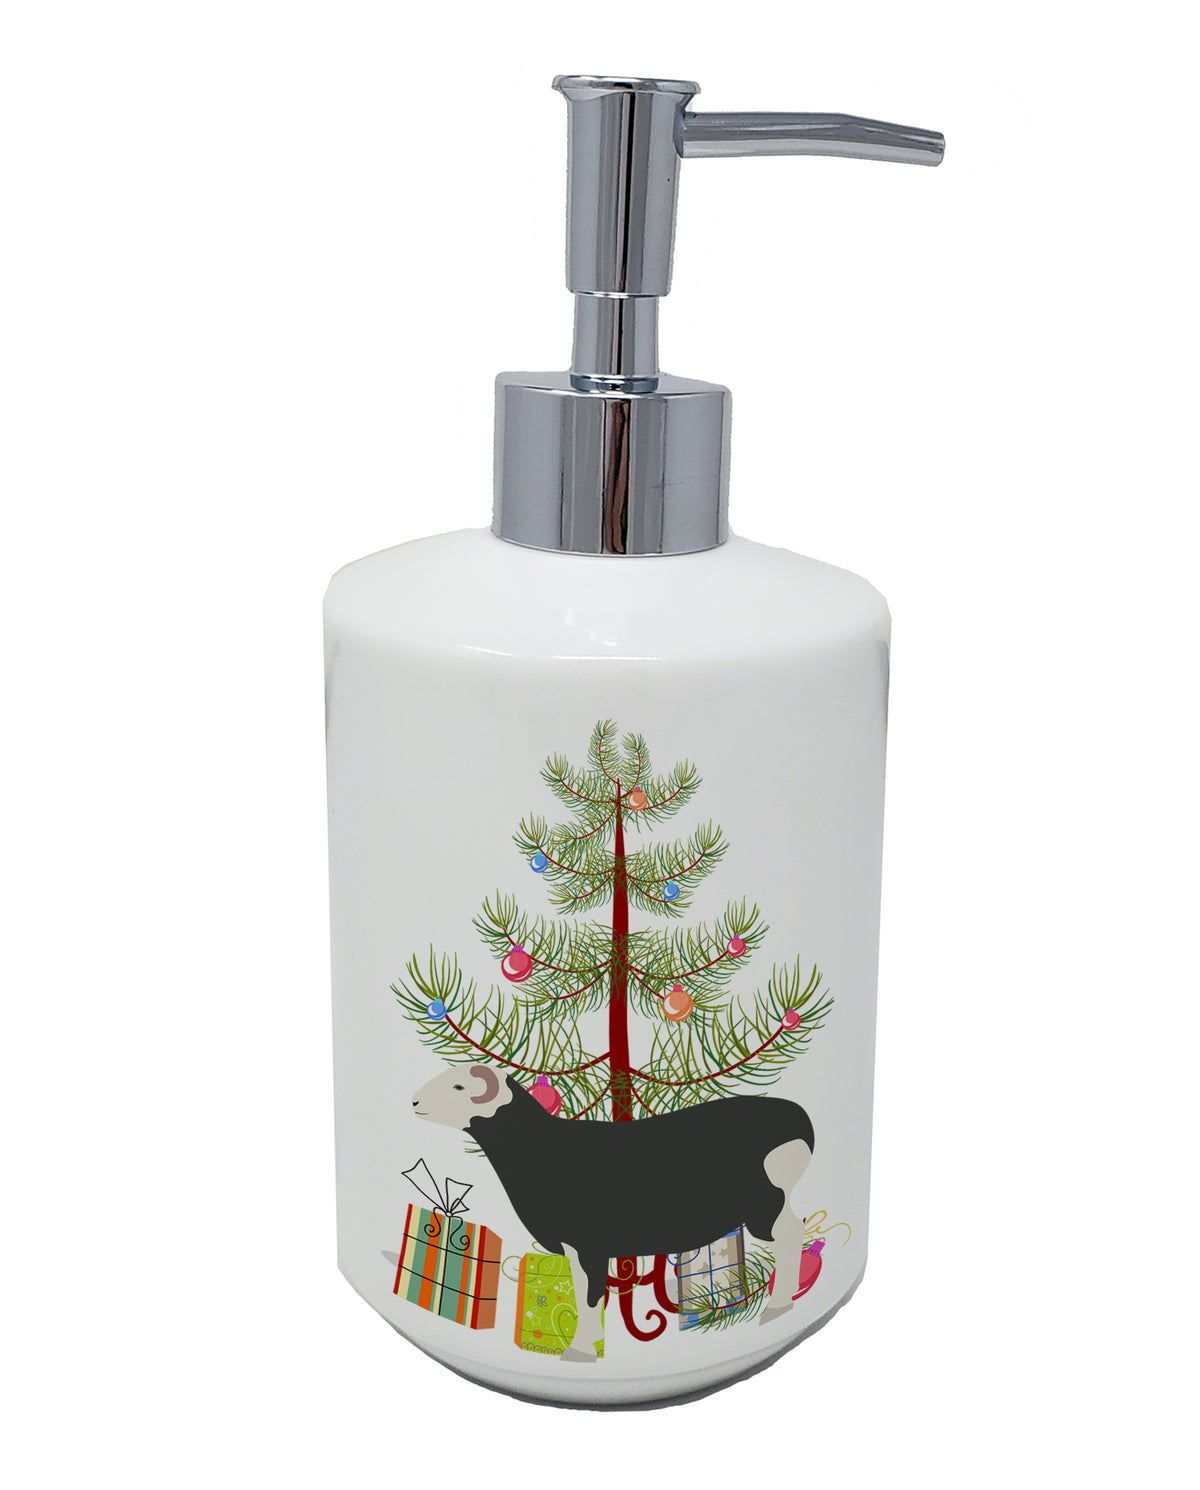 Buy this Herwick Sheep Christmas Ceramic Soap Dispenser